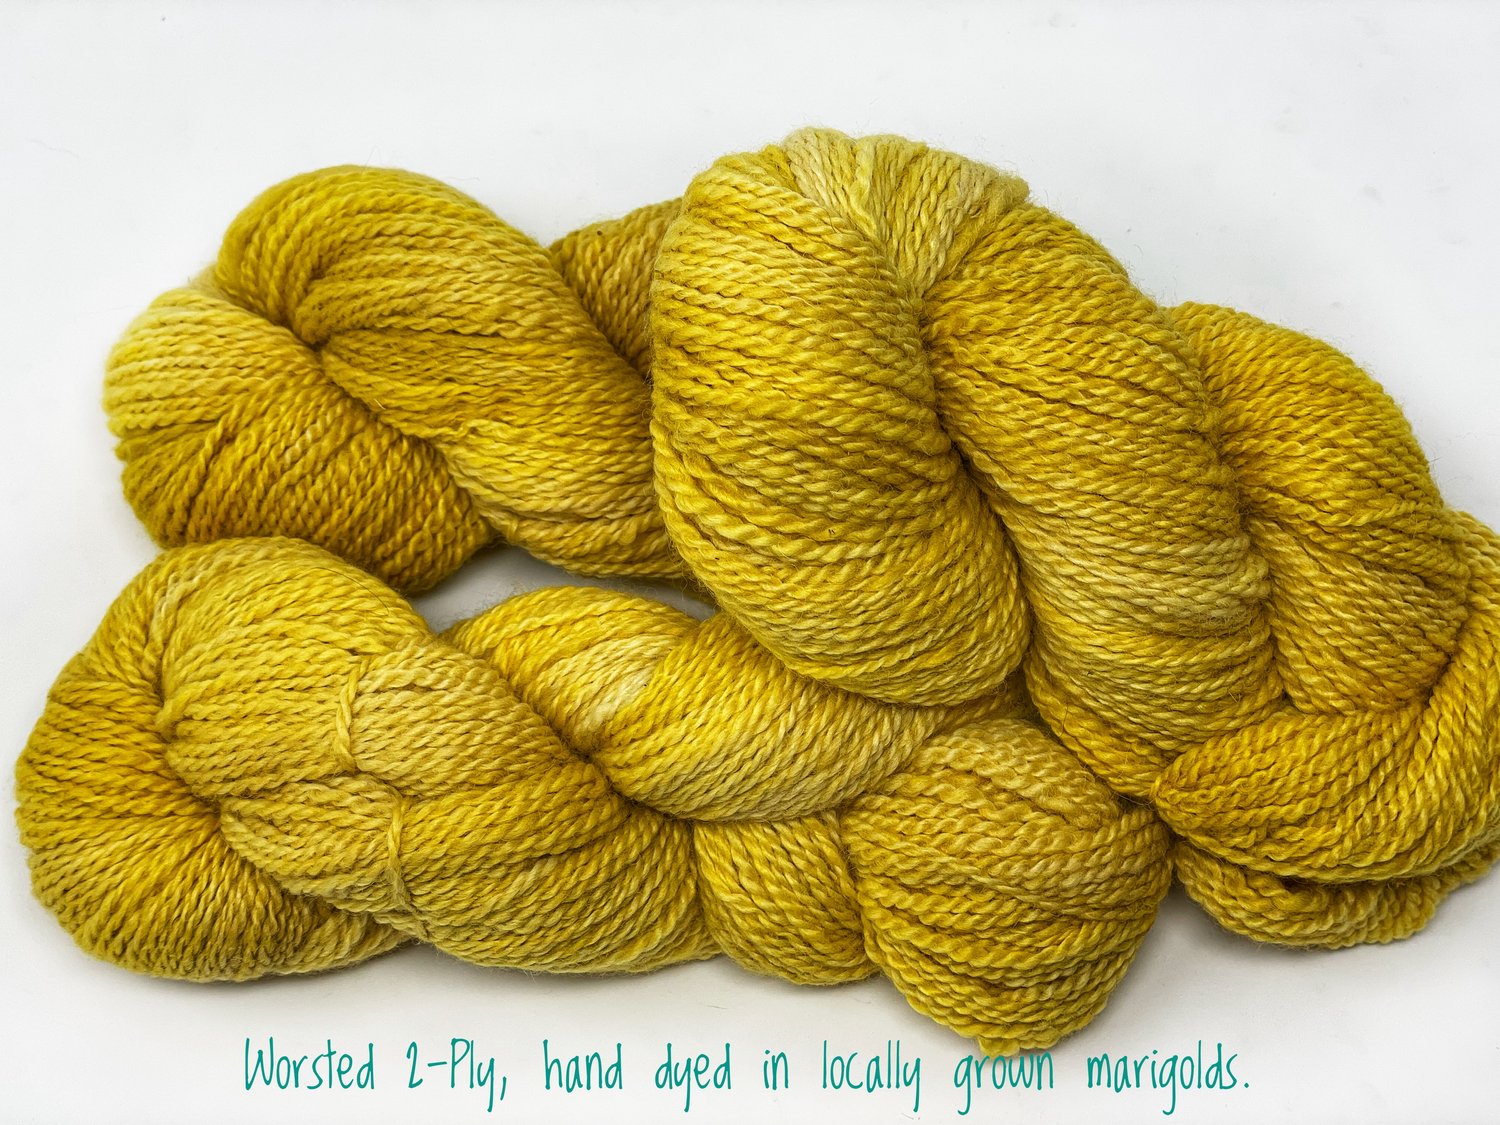 Handspun yarn, Natural color wool / alpaca / bamboo, DK weight